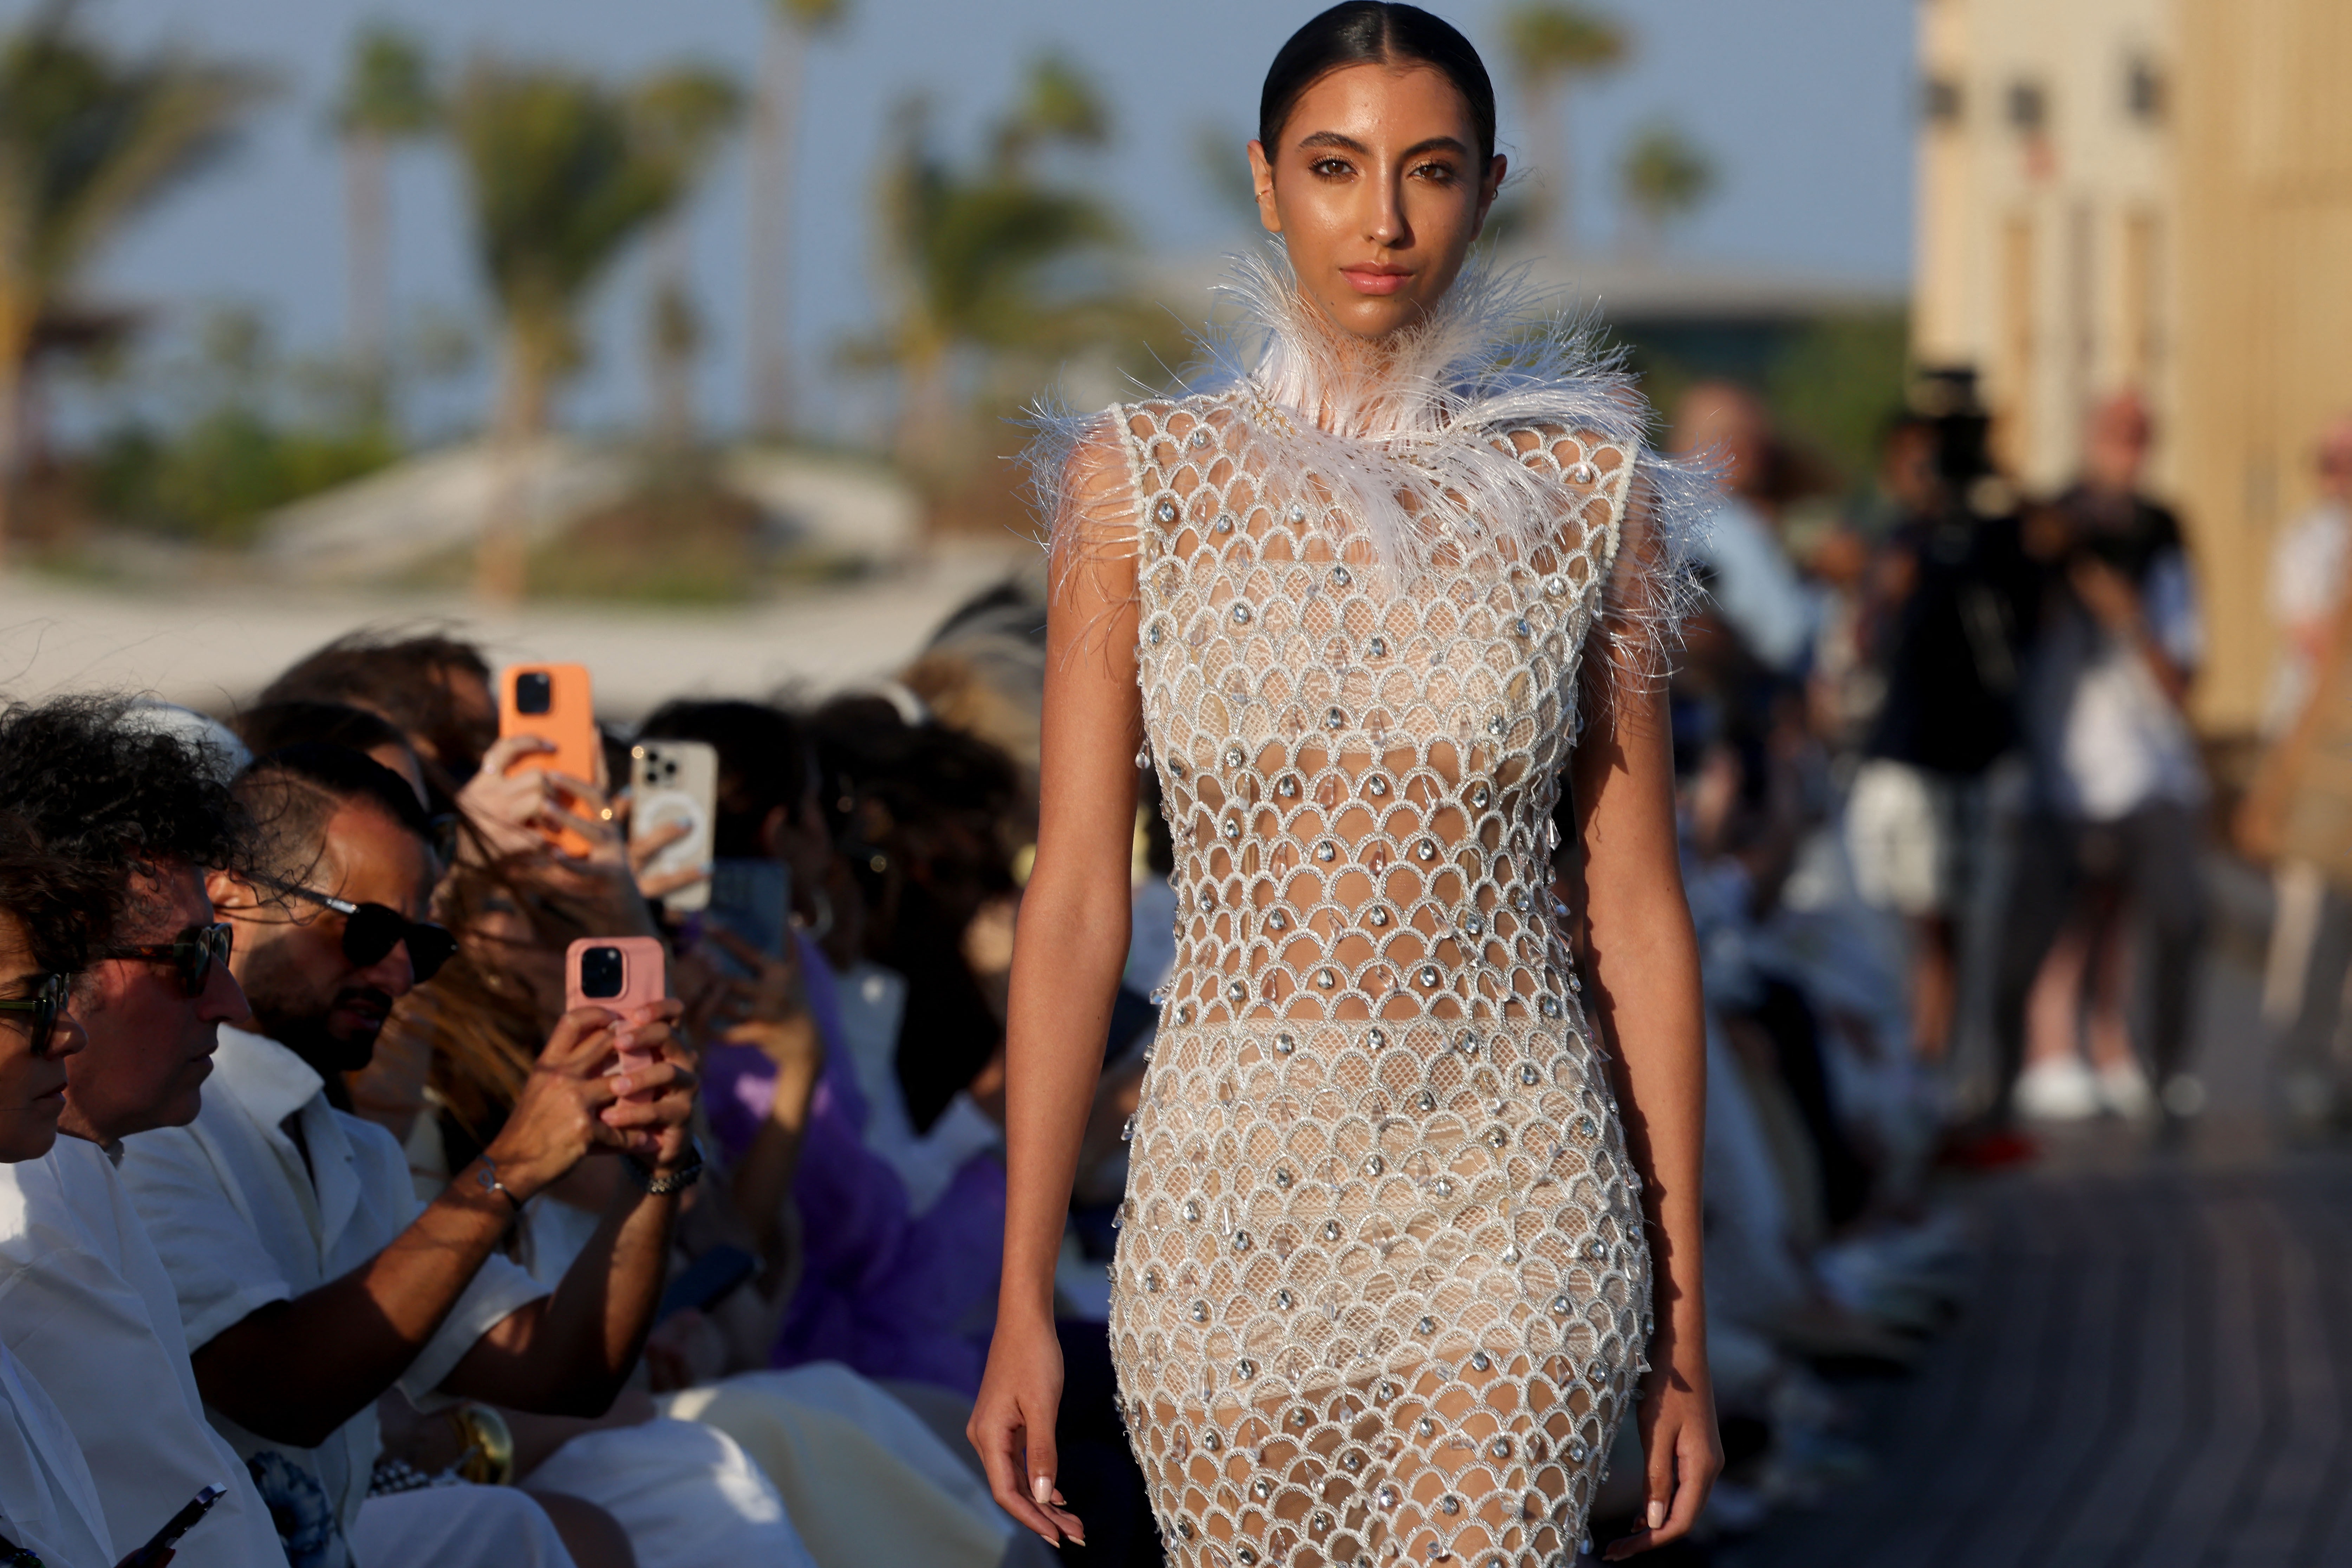 Saudi designer Tima Abid presented sea-inspired evening wear during Red Sea Fashion Week. Image: Fayez Nureldine/AFP via Getty Images